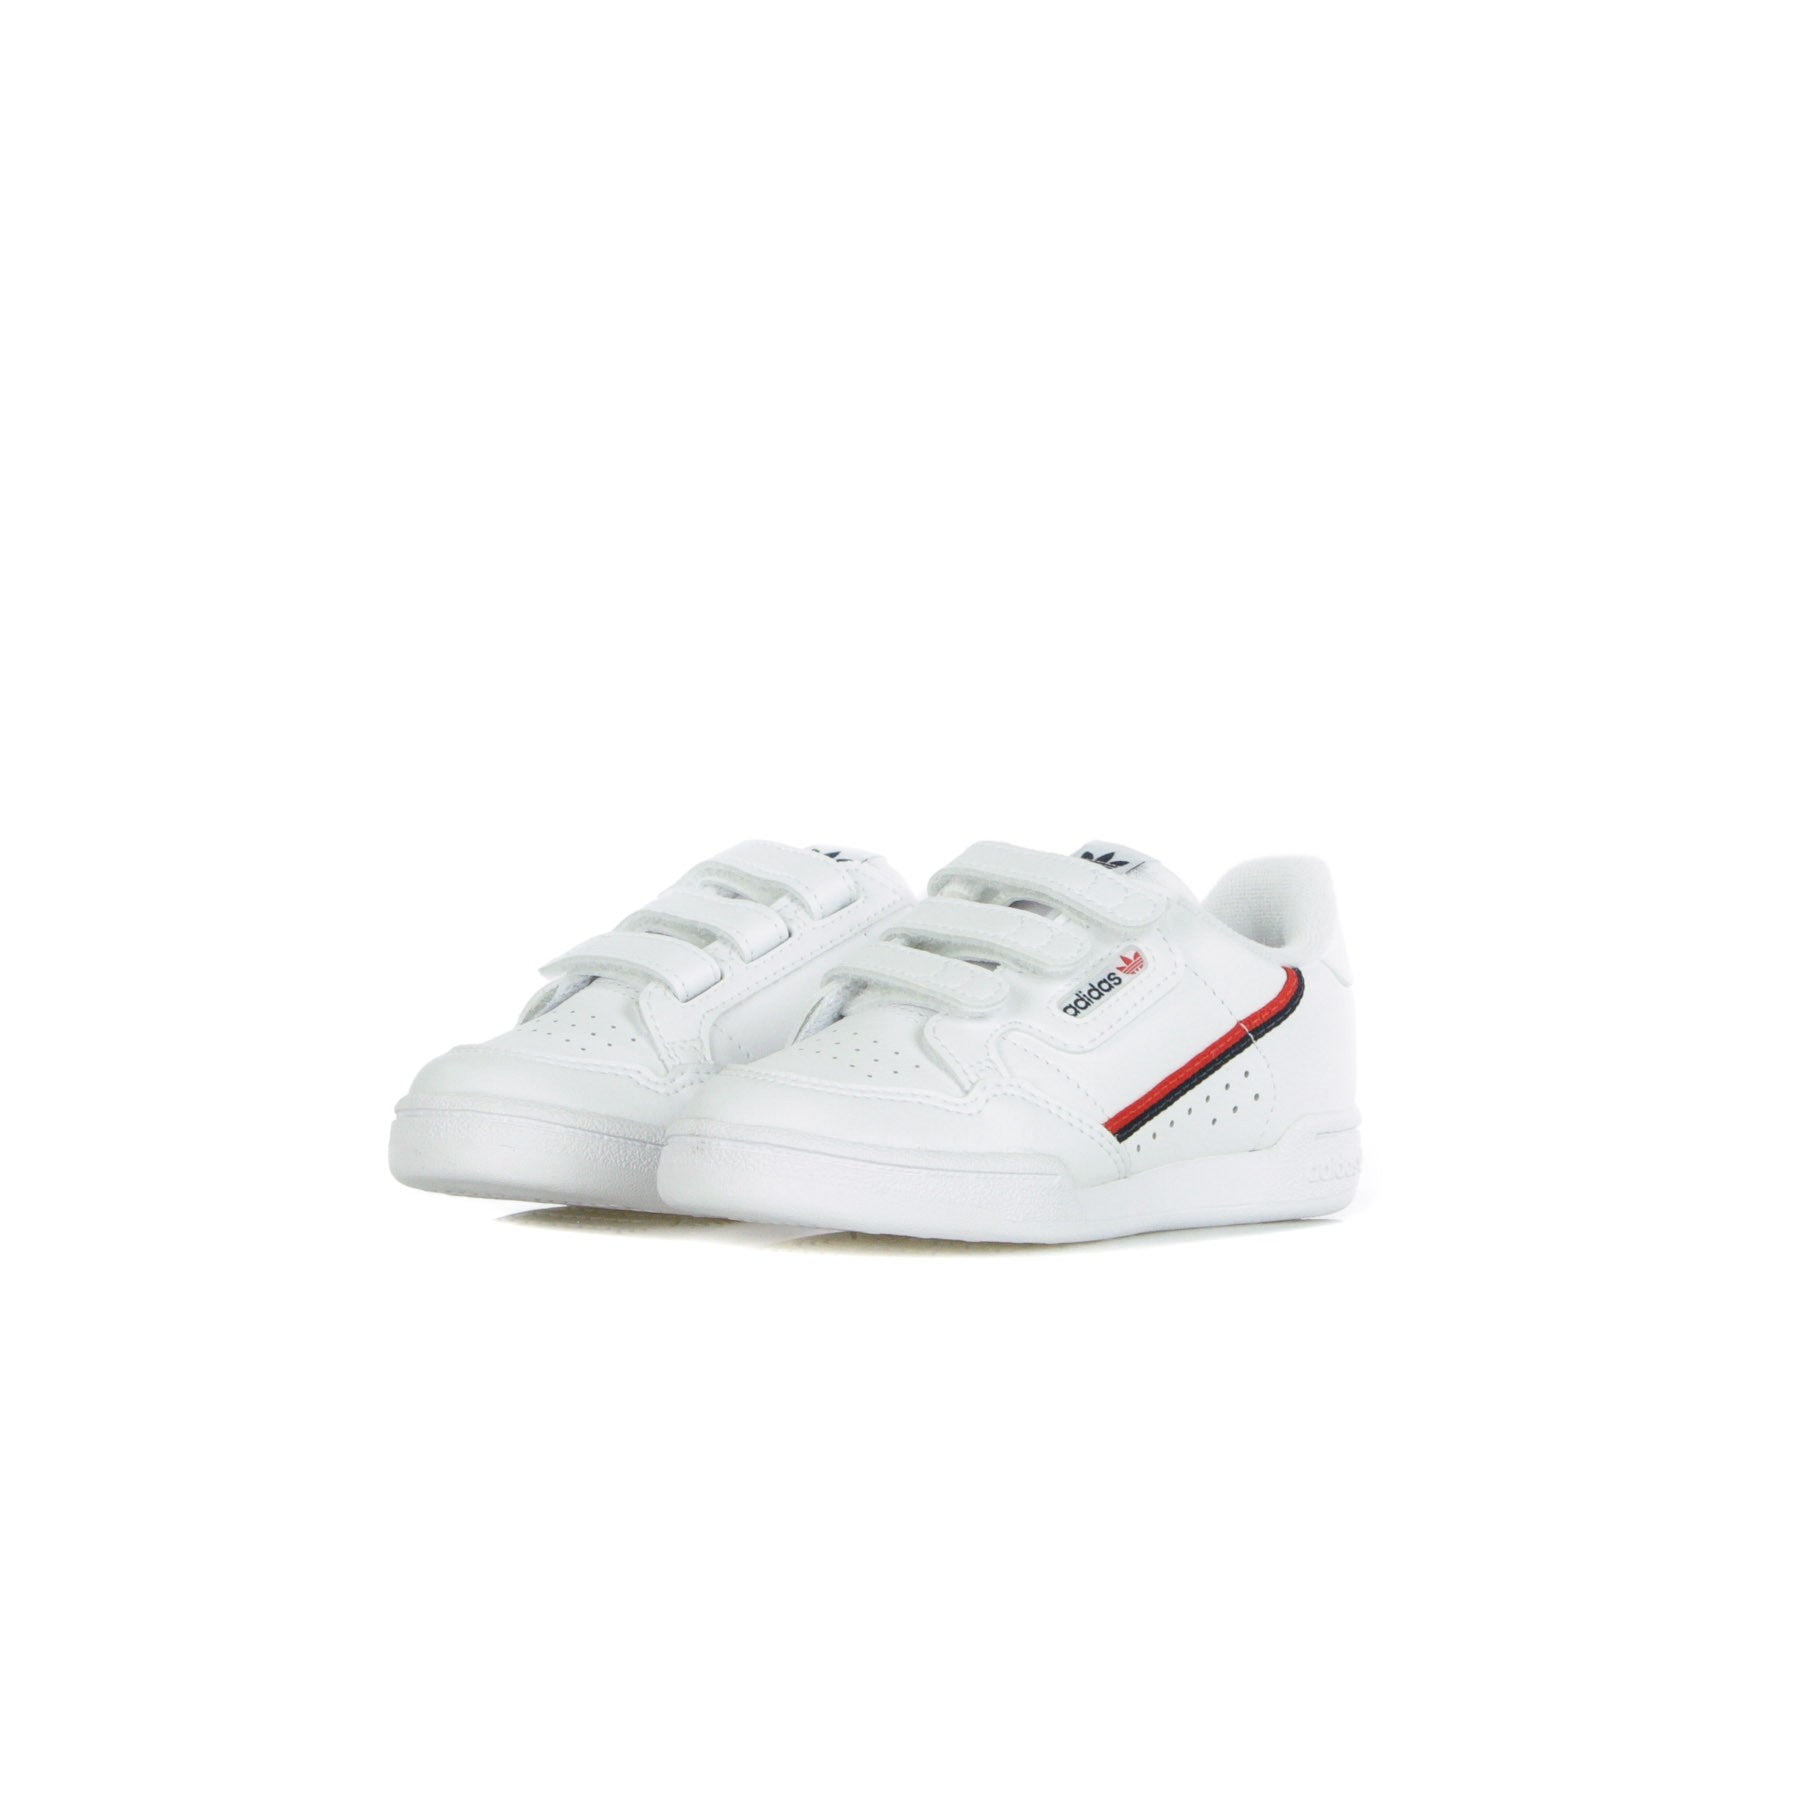 Adidas, Scarpa Bassa Bambino Continental 80 Cf I, 